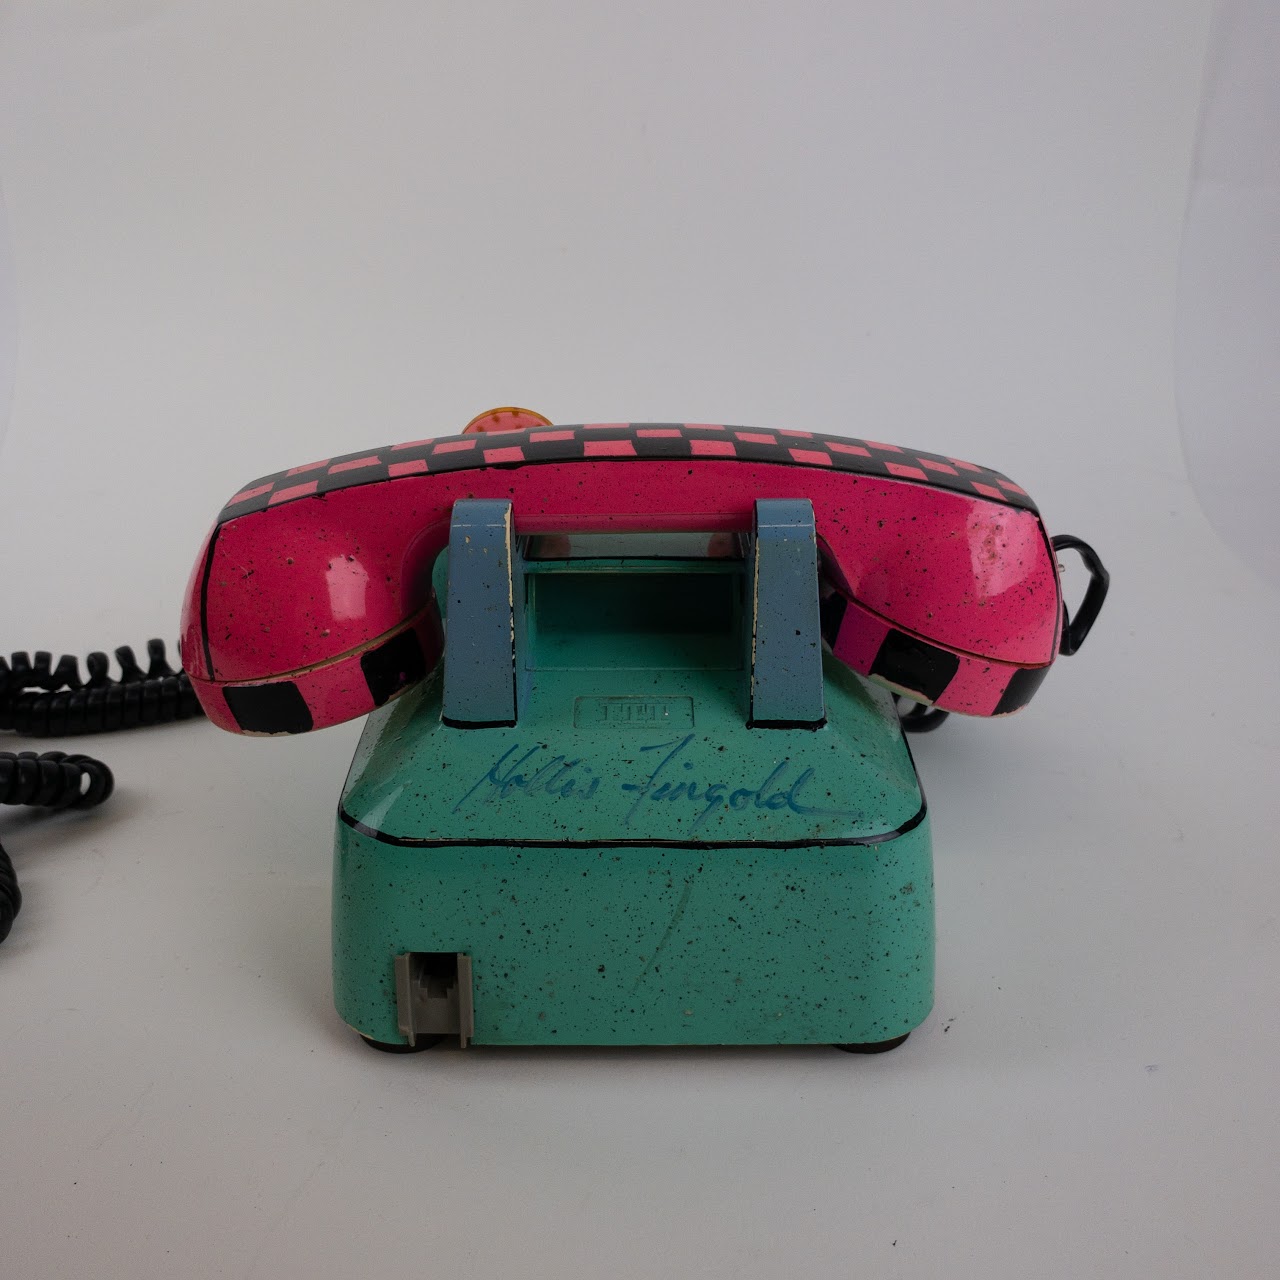 Hollis Fingold 20th Century Signed Telephone Sculpture